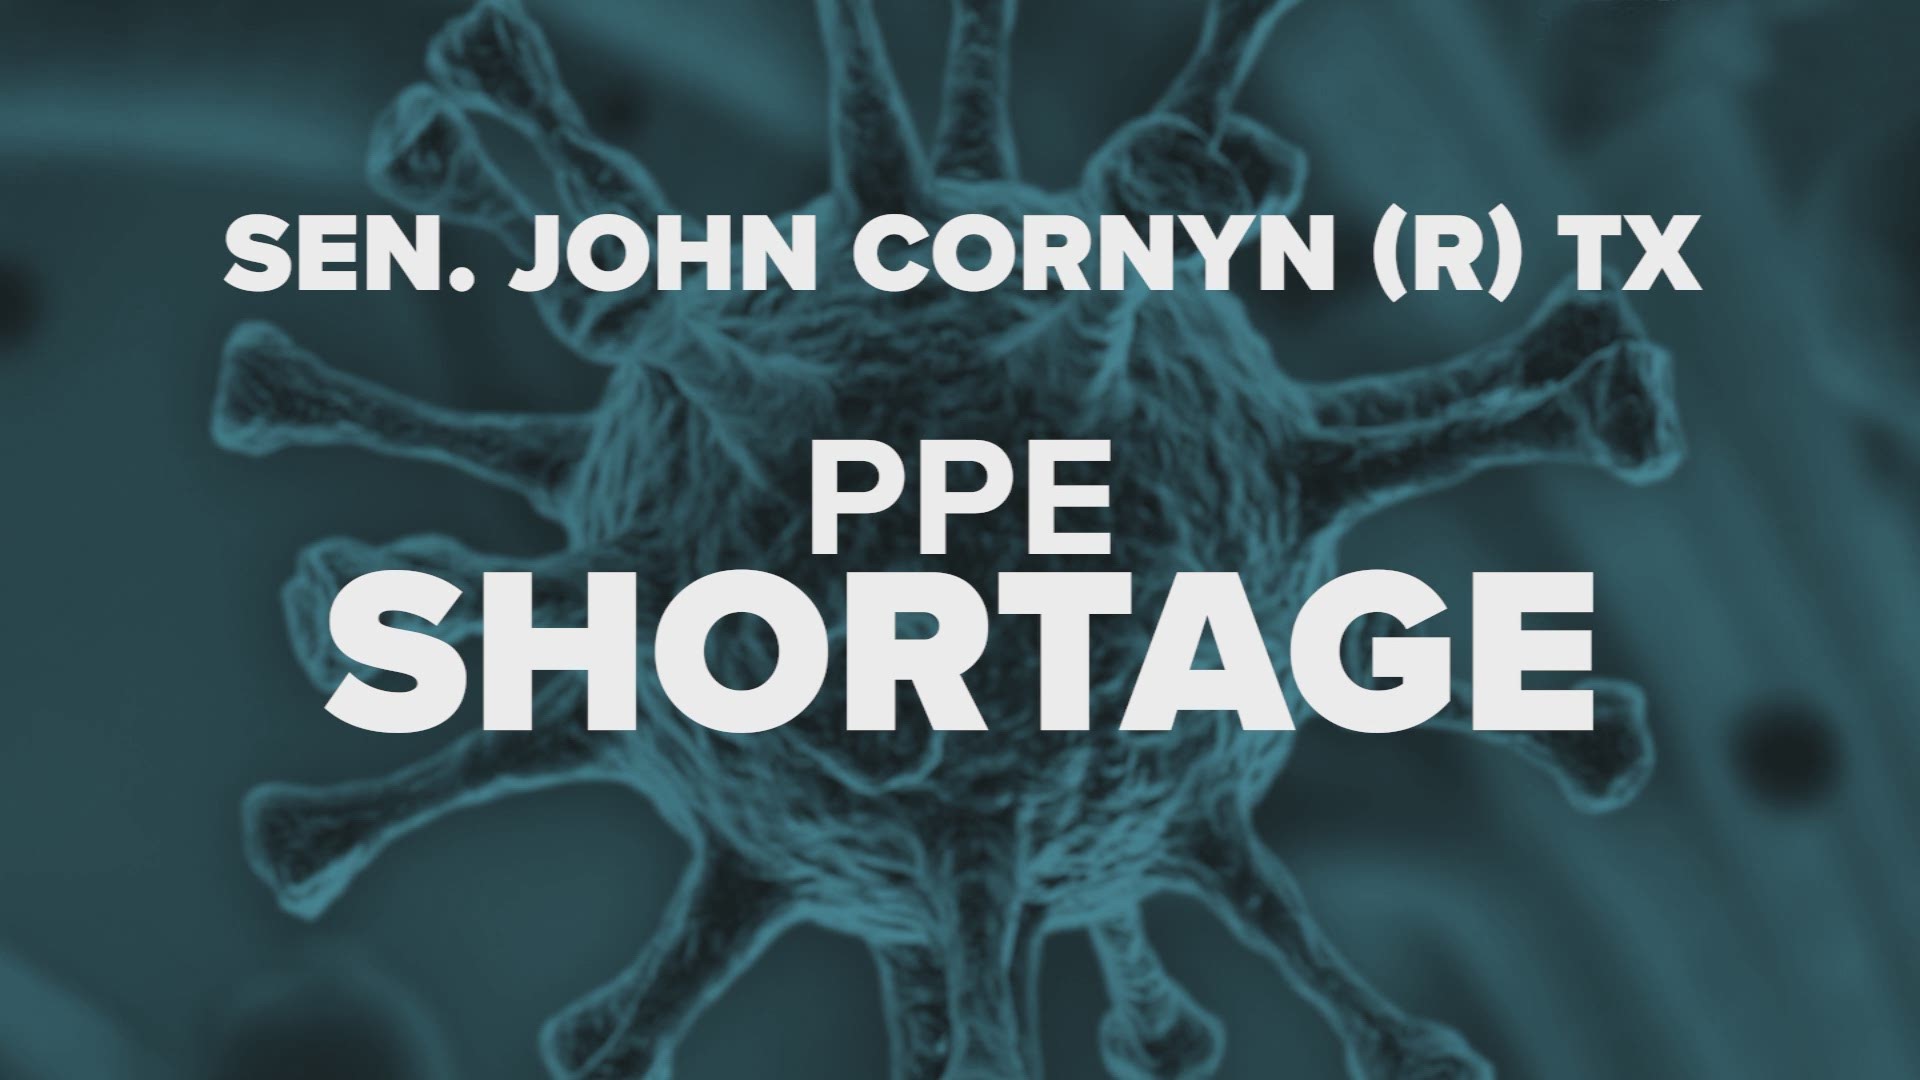 Sen. John Cornyn (R-Texas) talks about the PPE shortage in Texas.